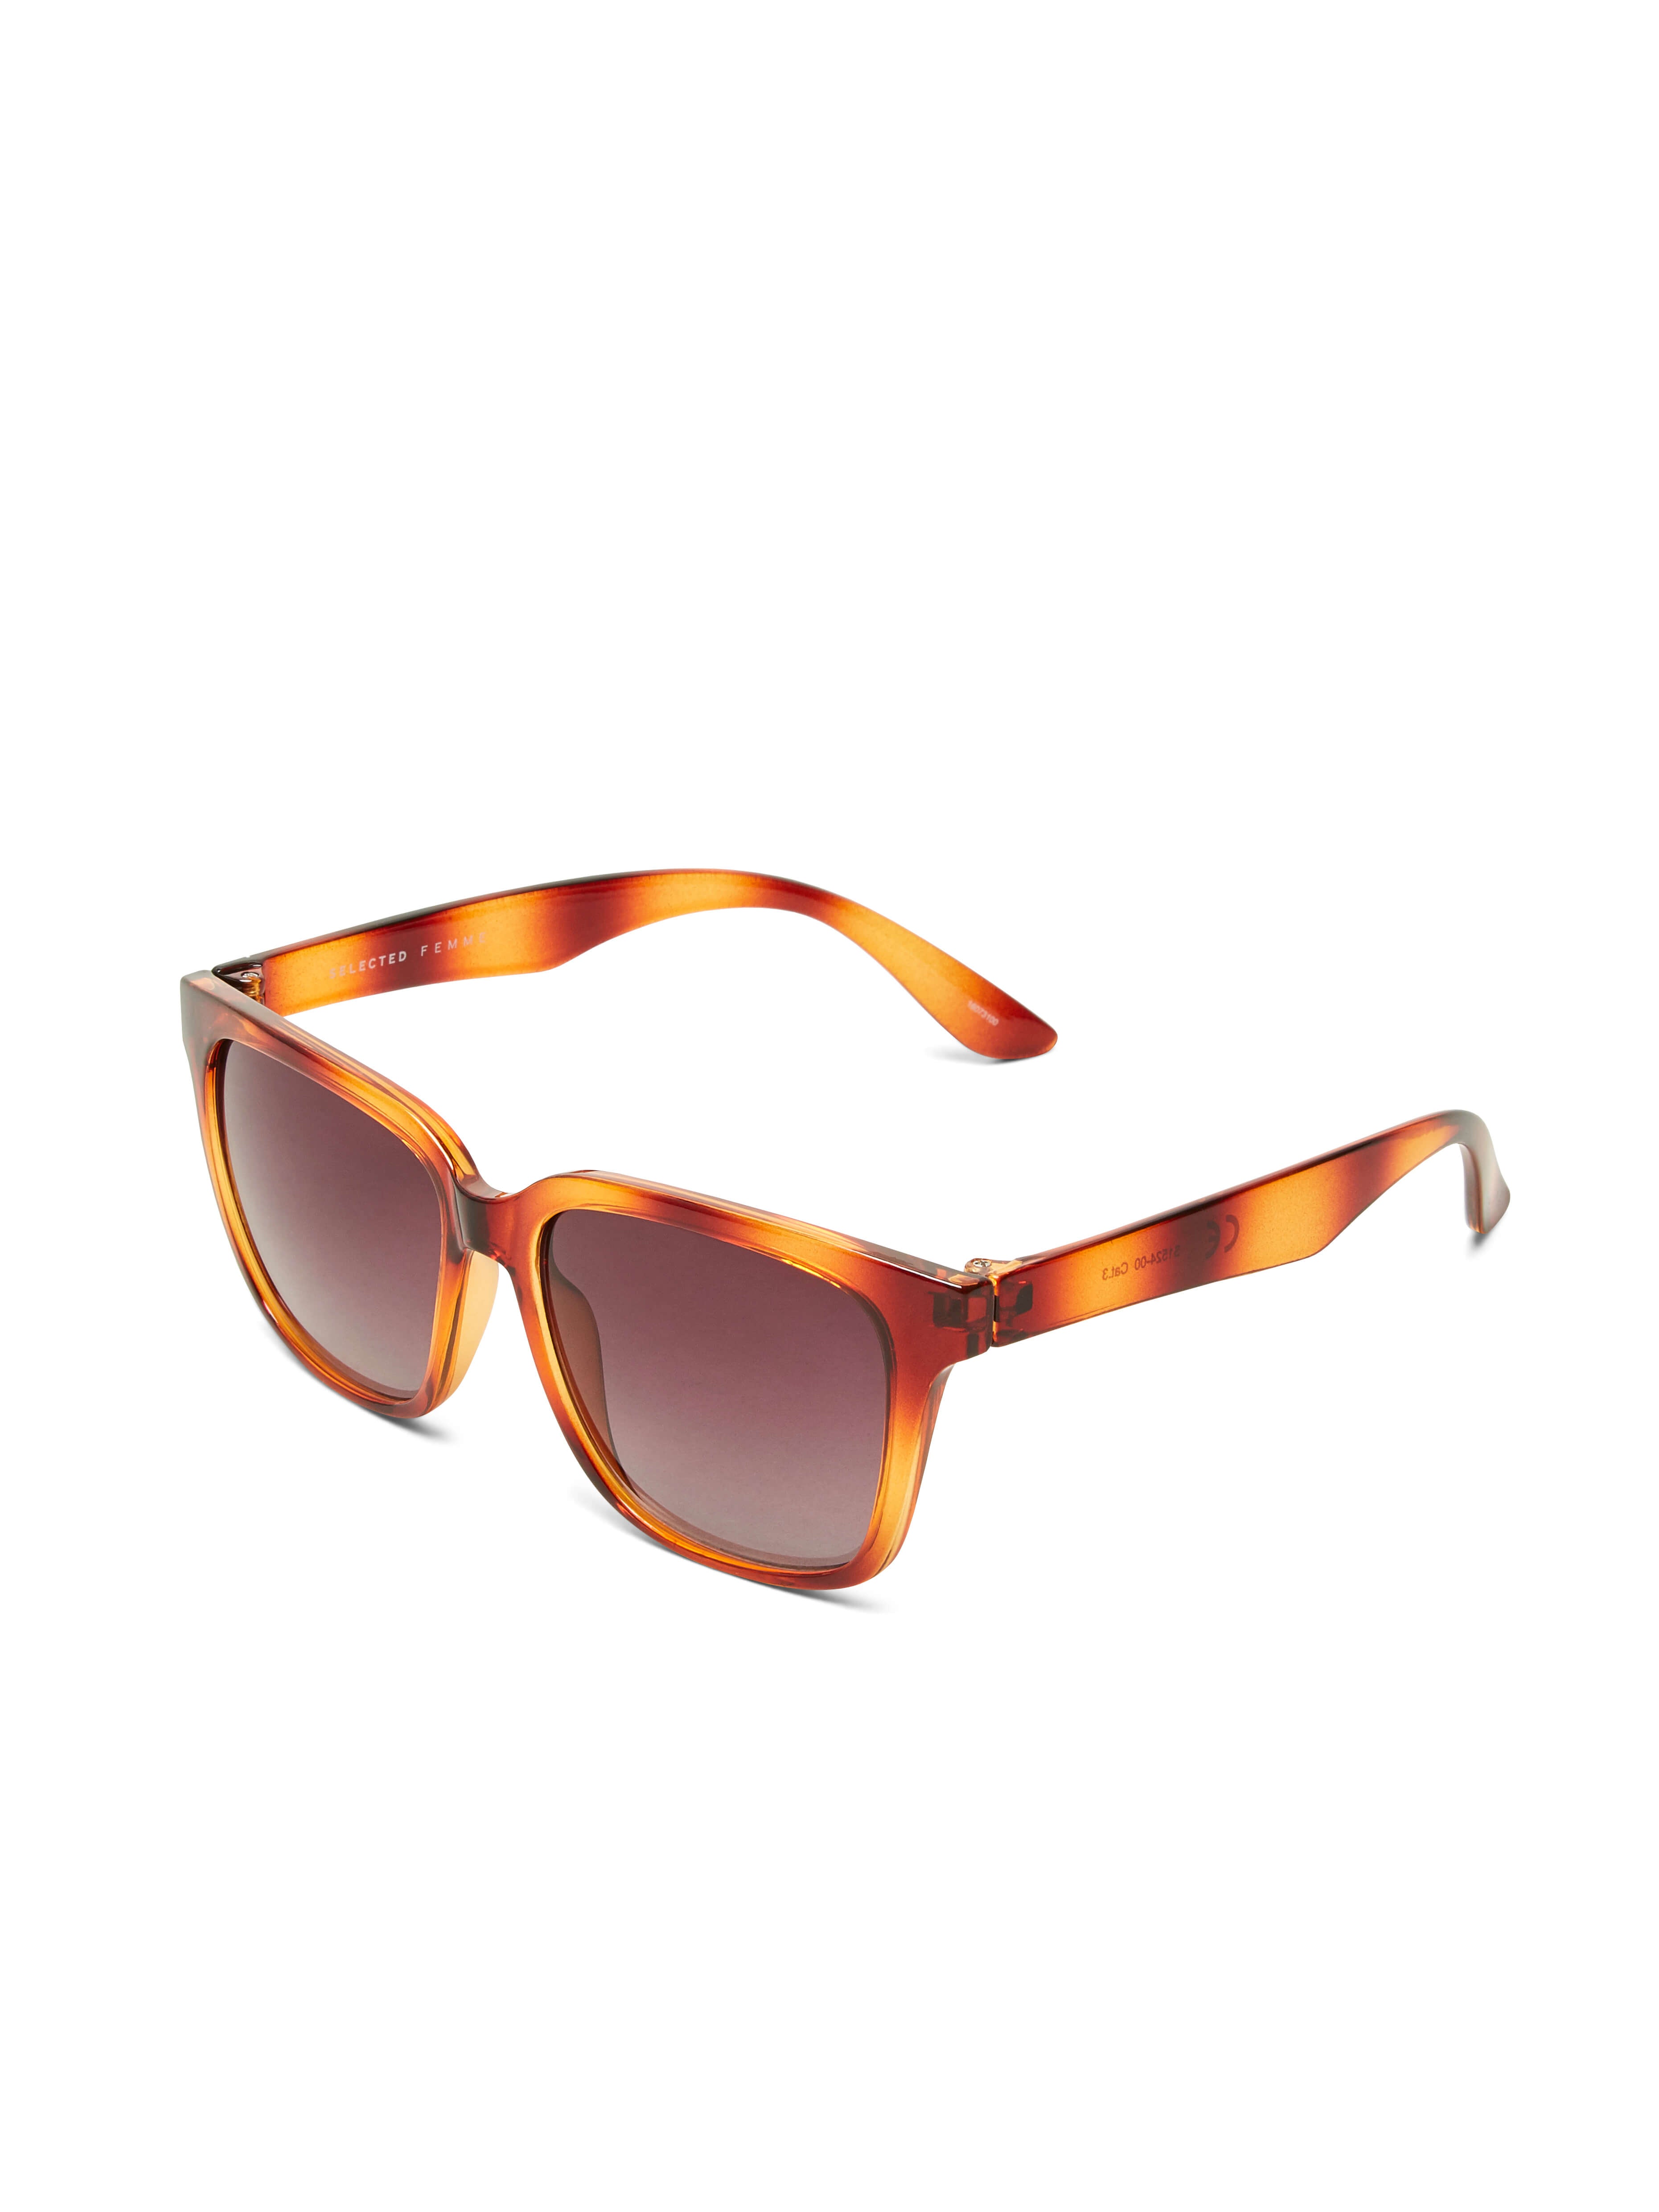 SLF Lovisa sunglasses in demitasse with square frame